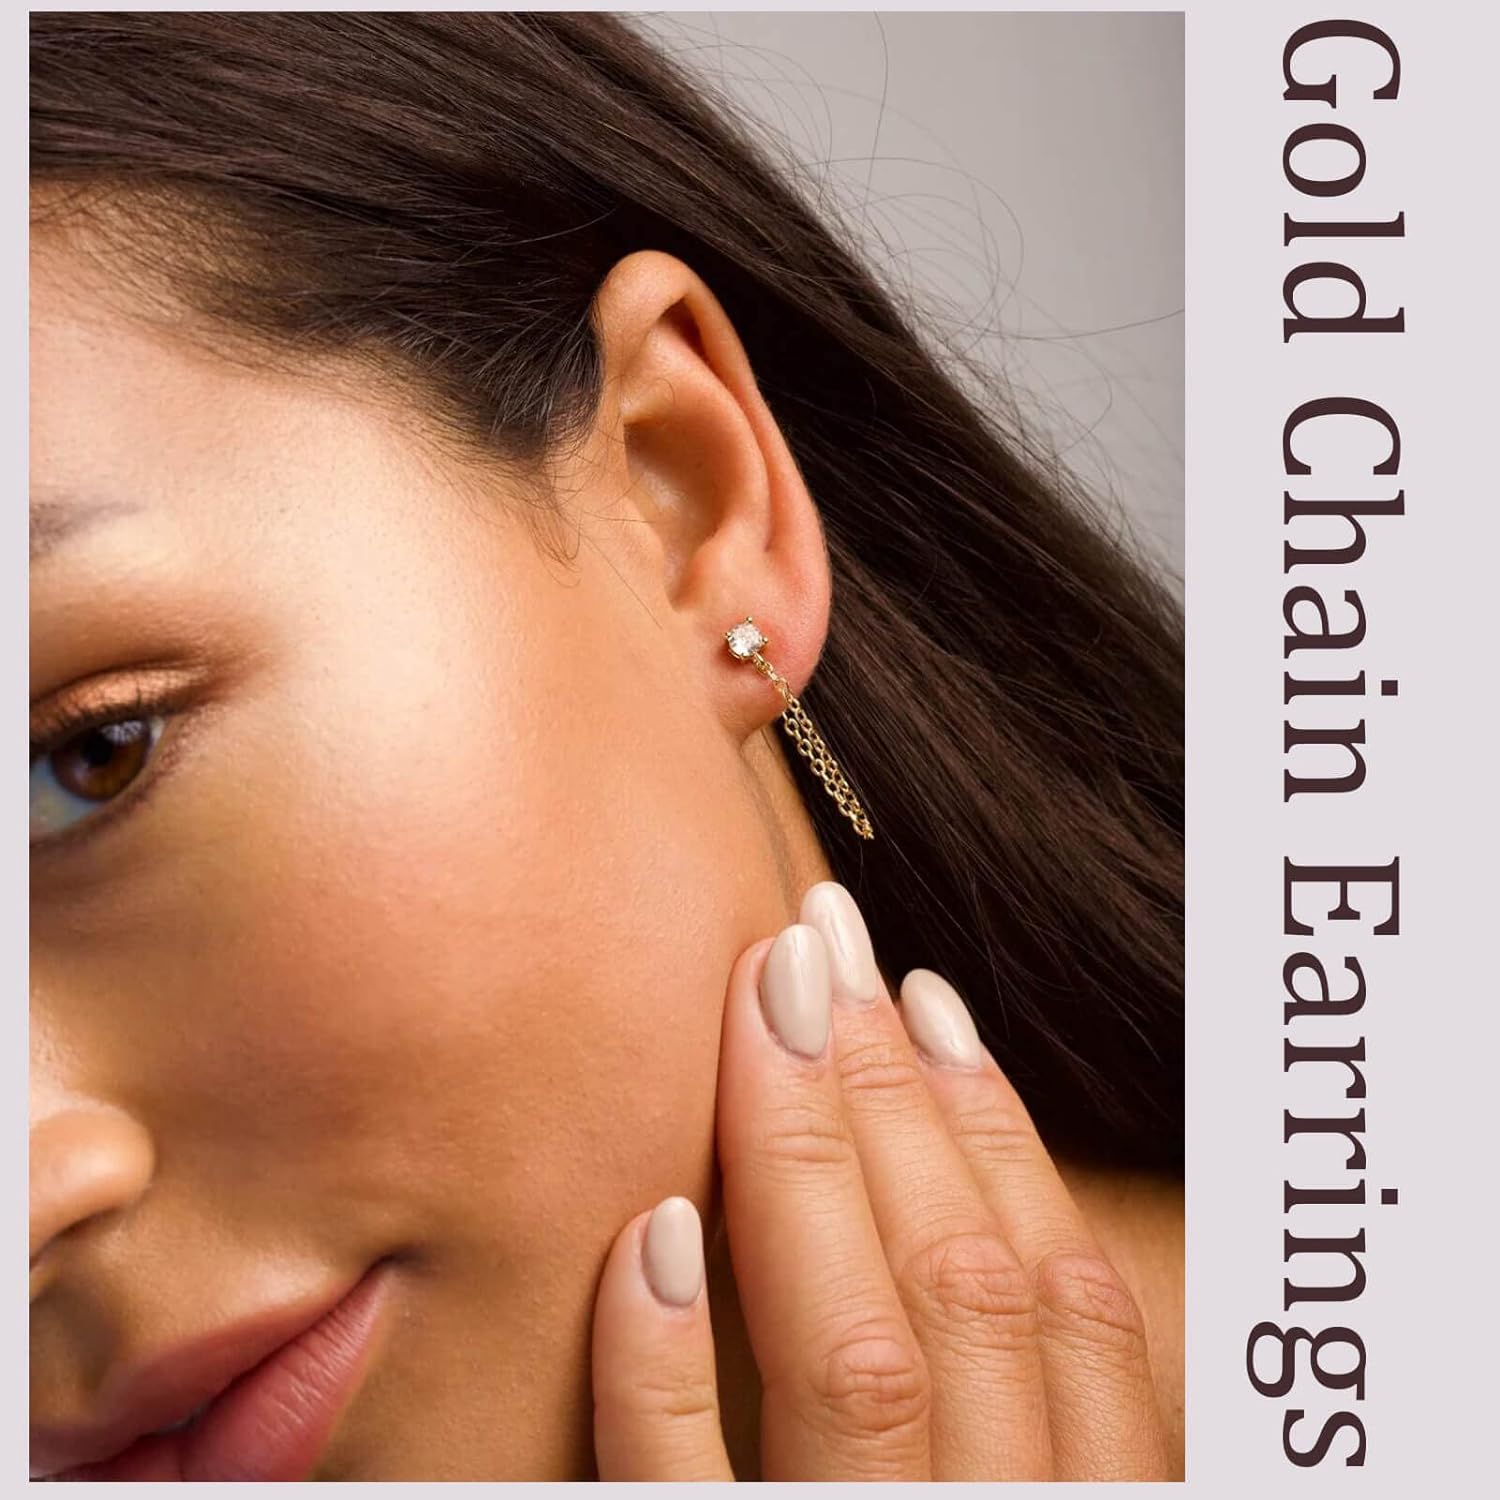 68 Pairs Gold Stud Earrings for Women Multipack, Hypoallergenic Assorted Girls Earring Set Multiple Piercings,Cubic Zirconia Pearl Butterfly Stud Hoop Earring Pack